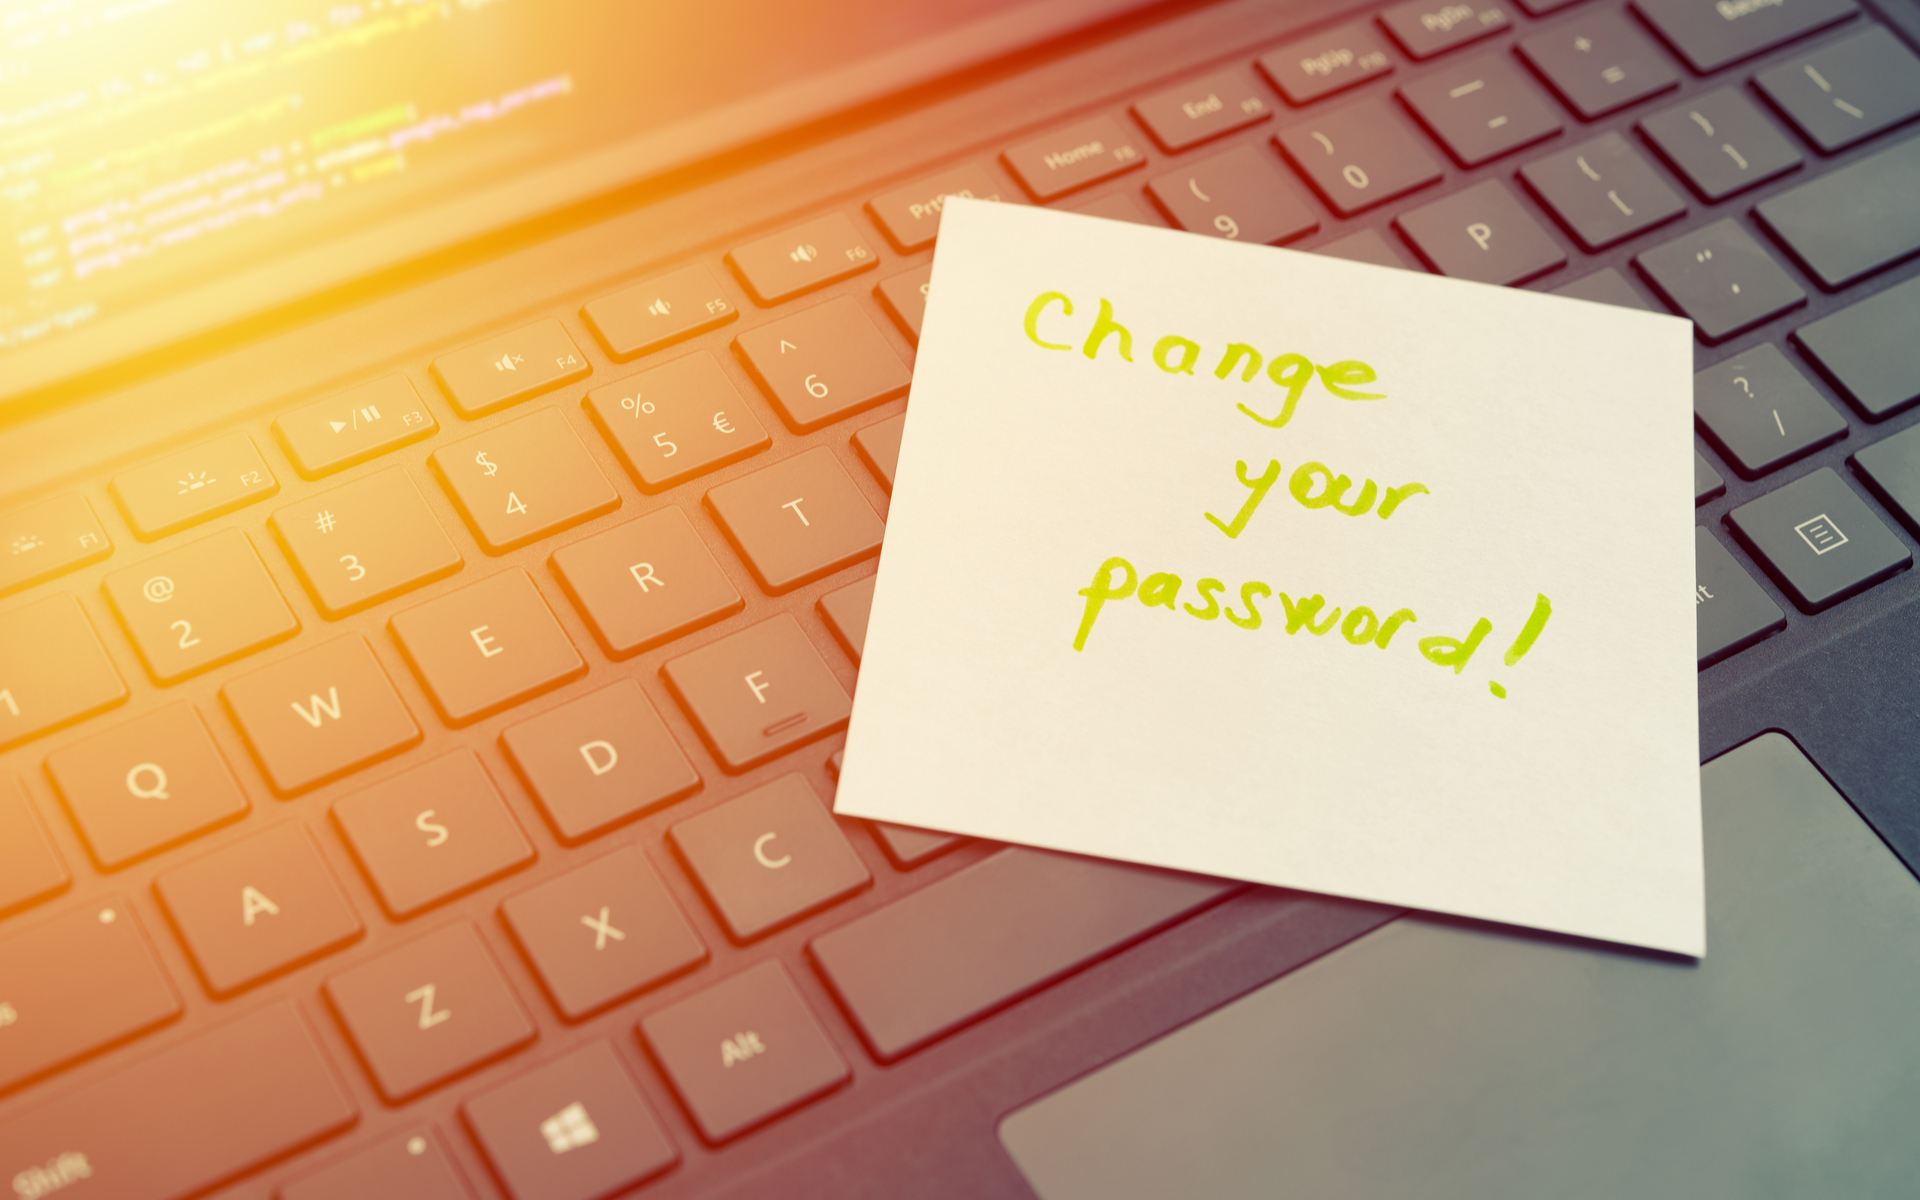 IOTA Holders Urged To Change Wallet Passwords Now